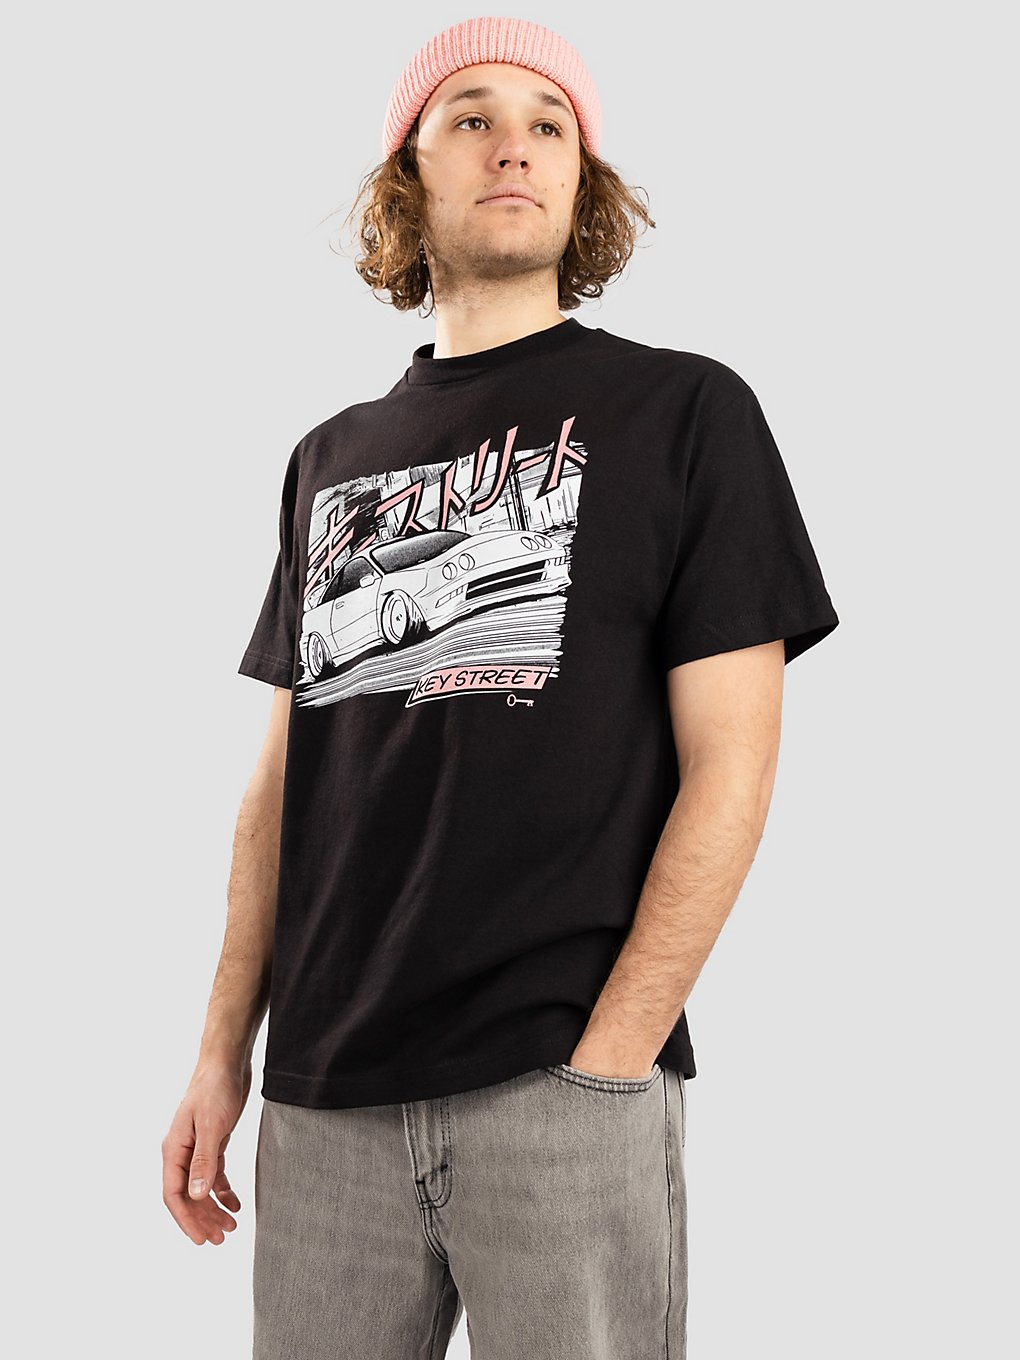 Key Street Speedin T-Shirt black kaufen